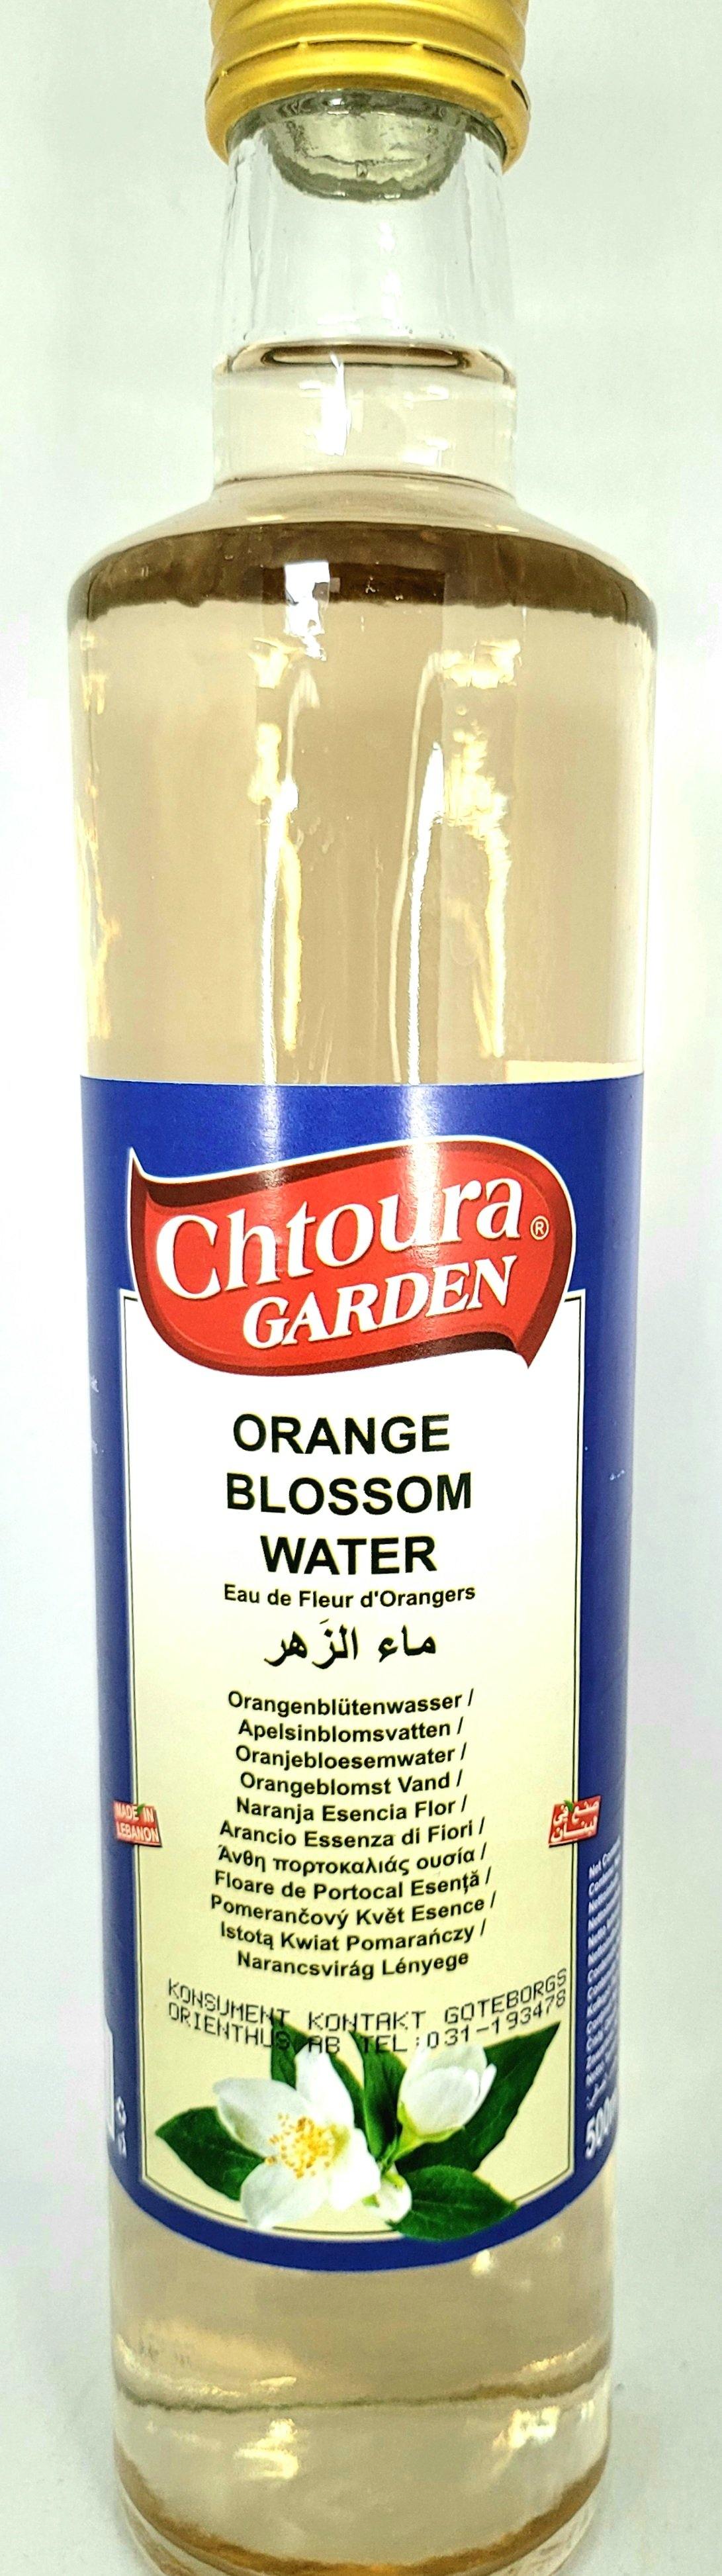 Chtoura Orange Blossom Water 500ml - Arabian Shopping Zone